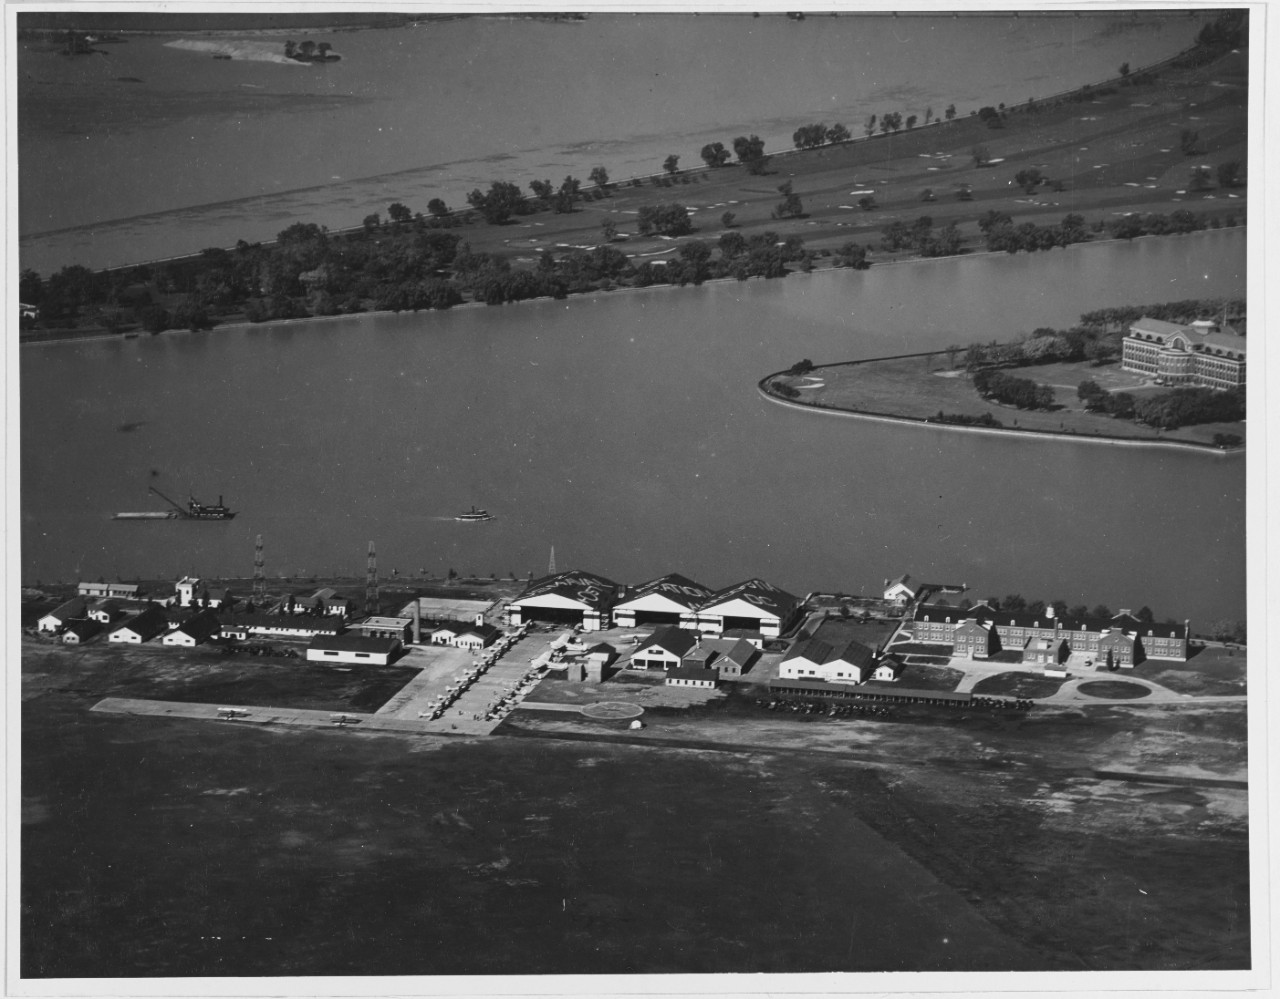 U.S. Naval Air Station, Anacostia, Washington, D.C. 1932